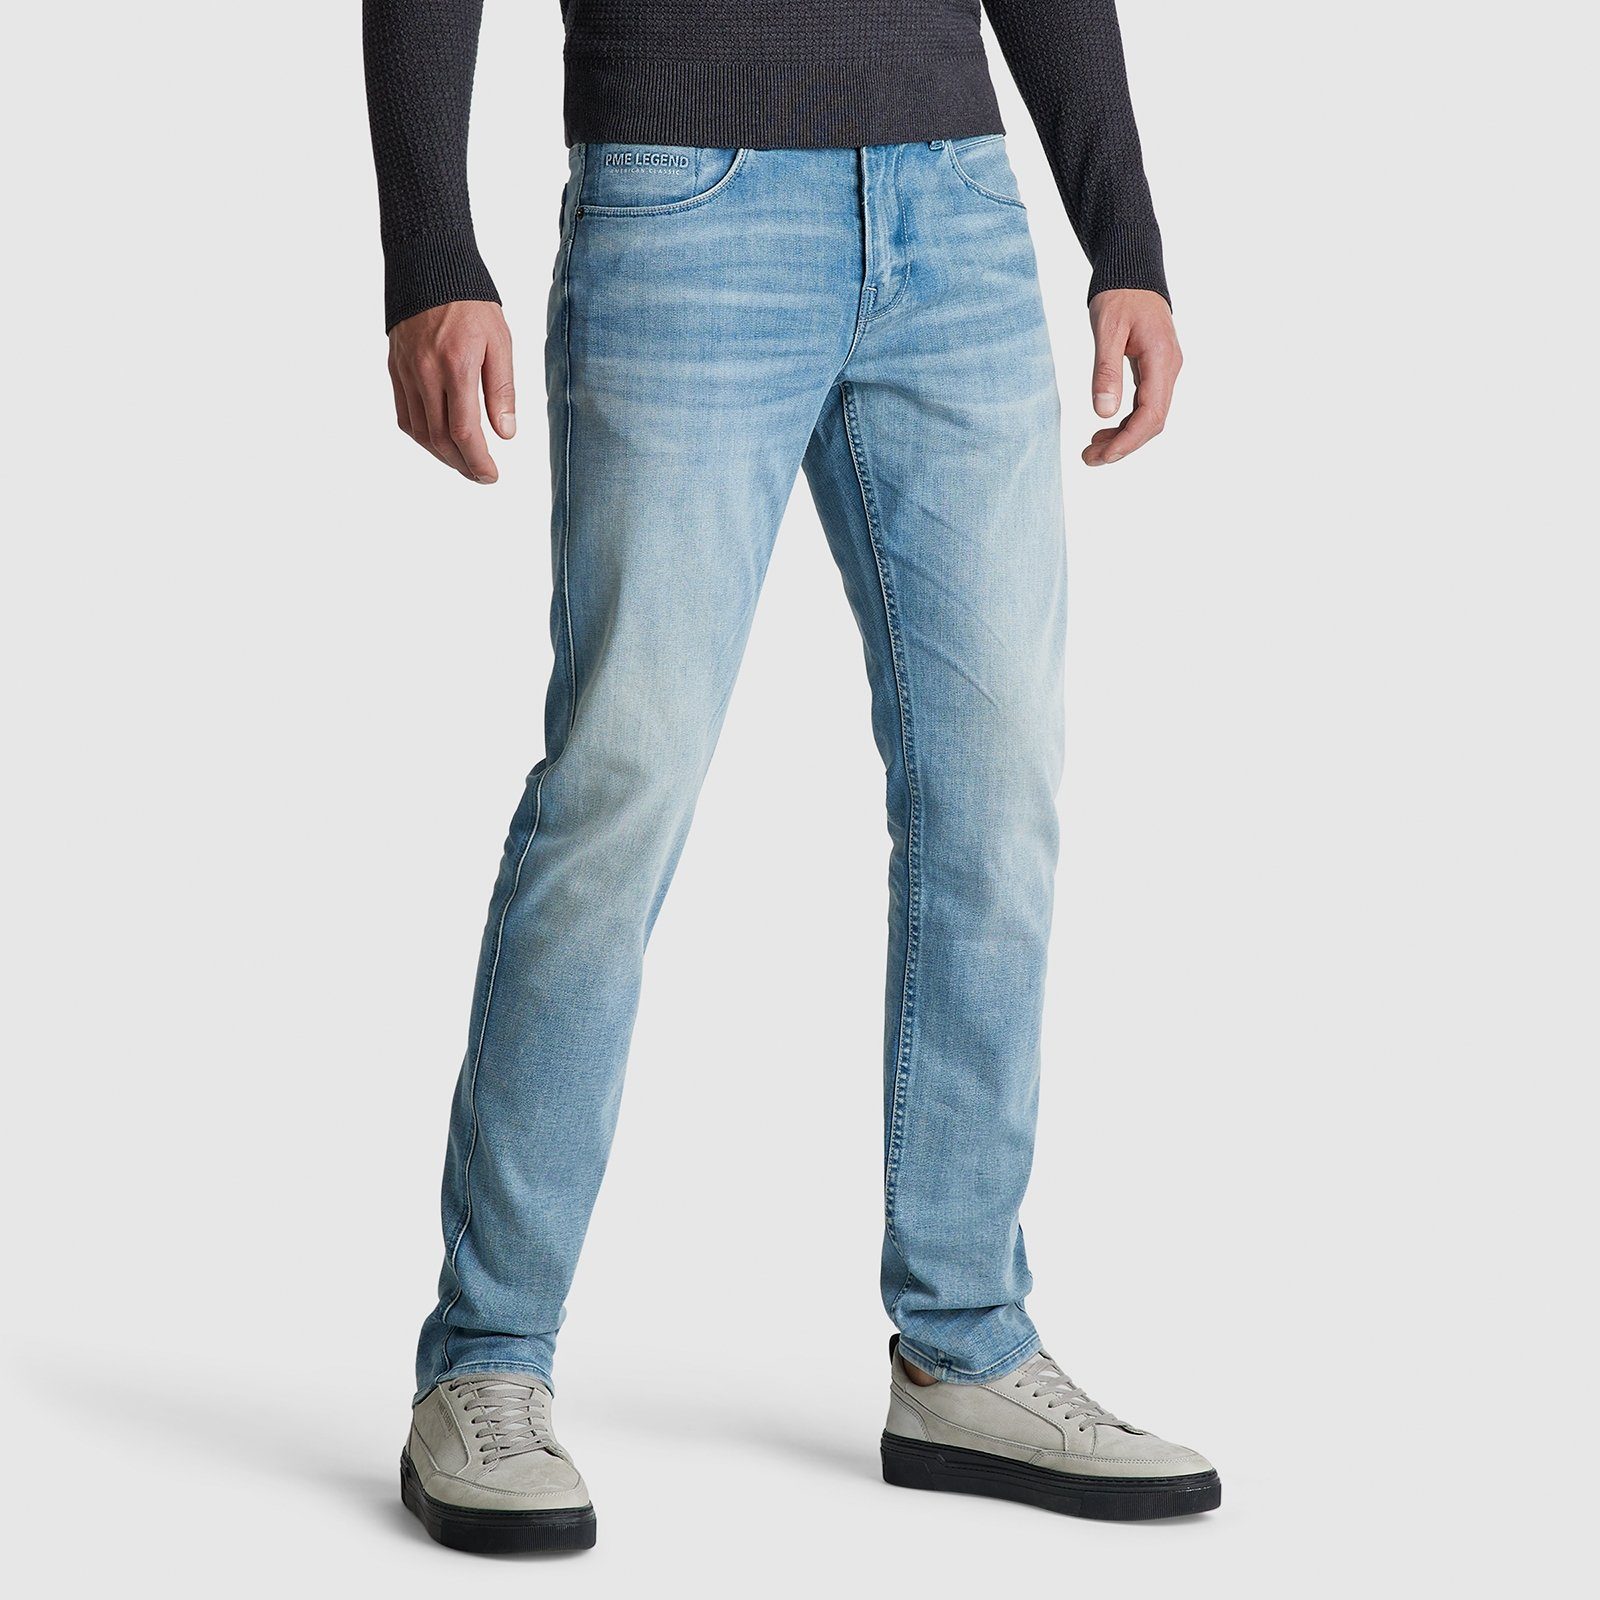 BRIGH JEANS LEGEND 5-Pocket-Jeans PME PME NIGHTFLIGHT LEGEND